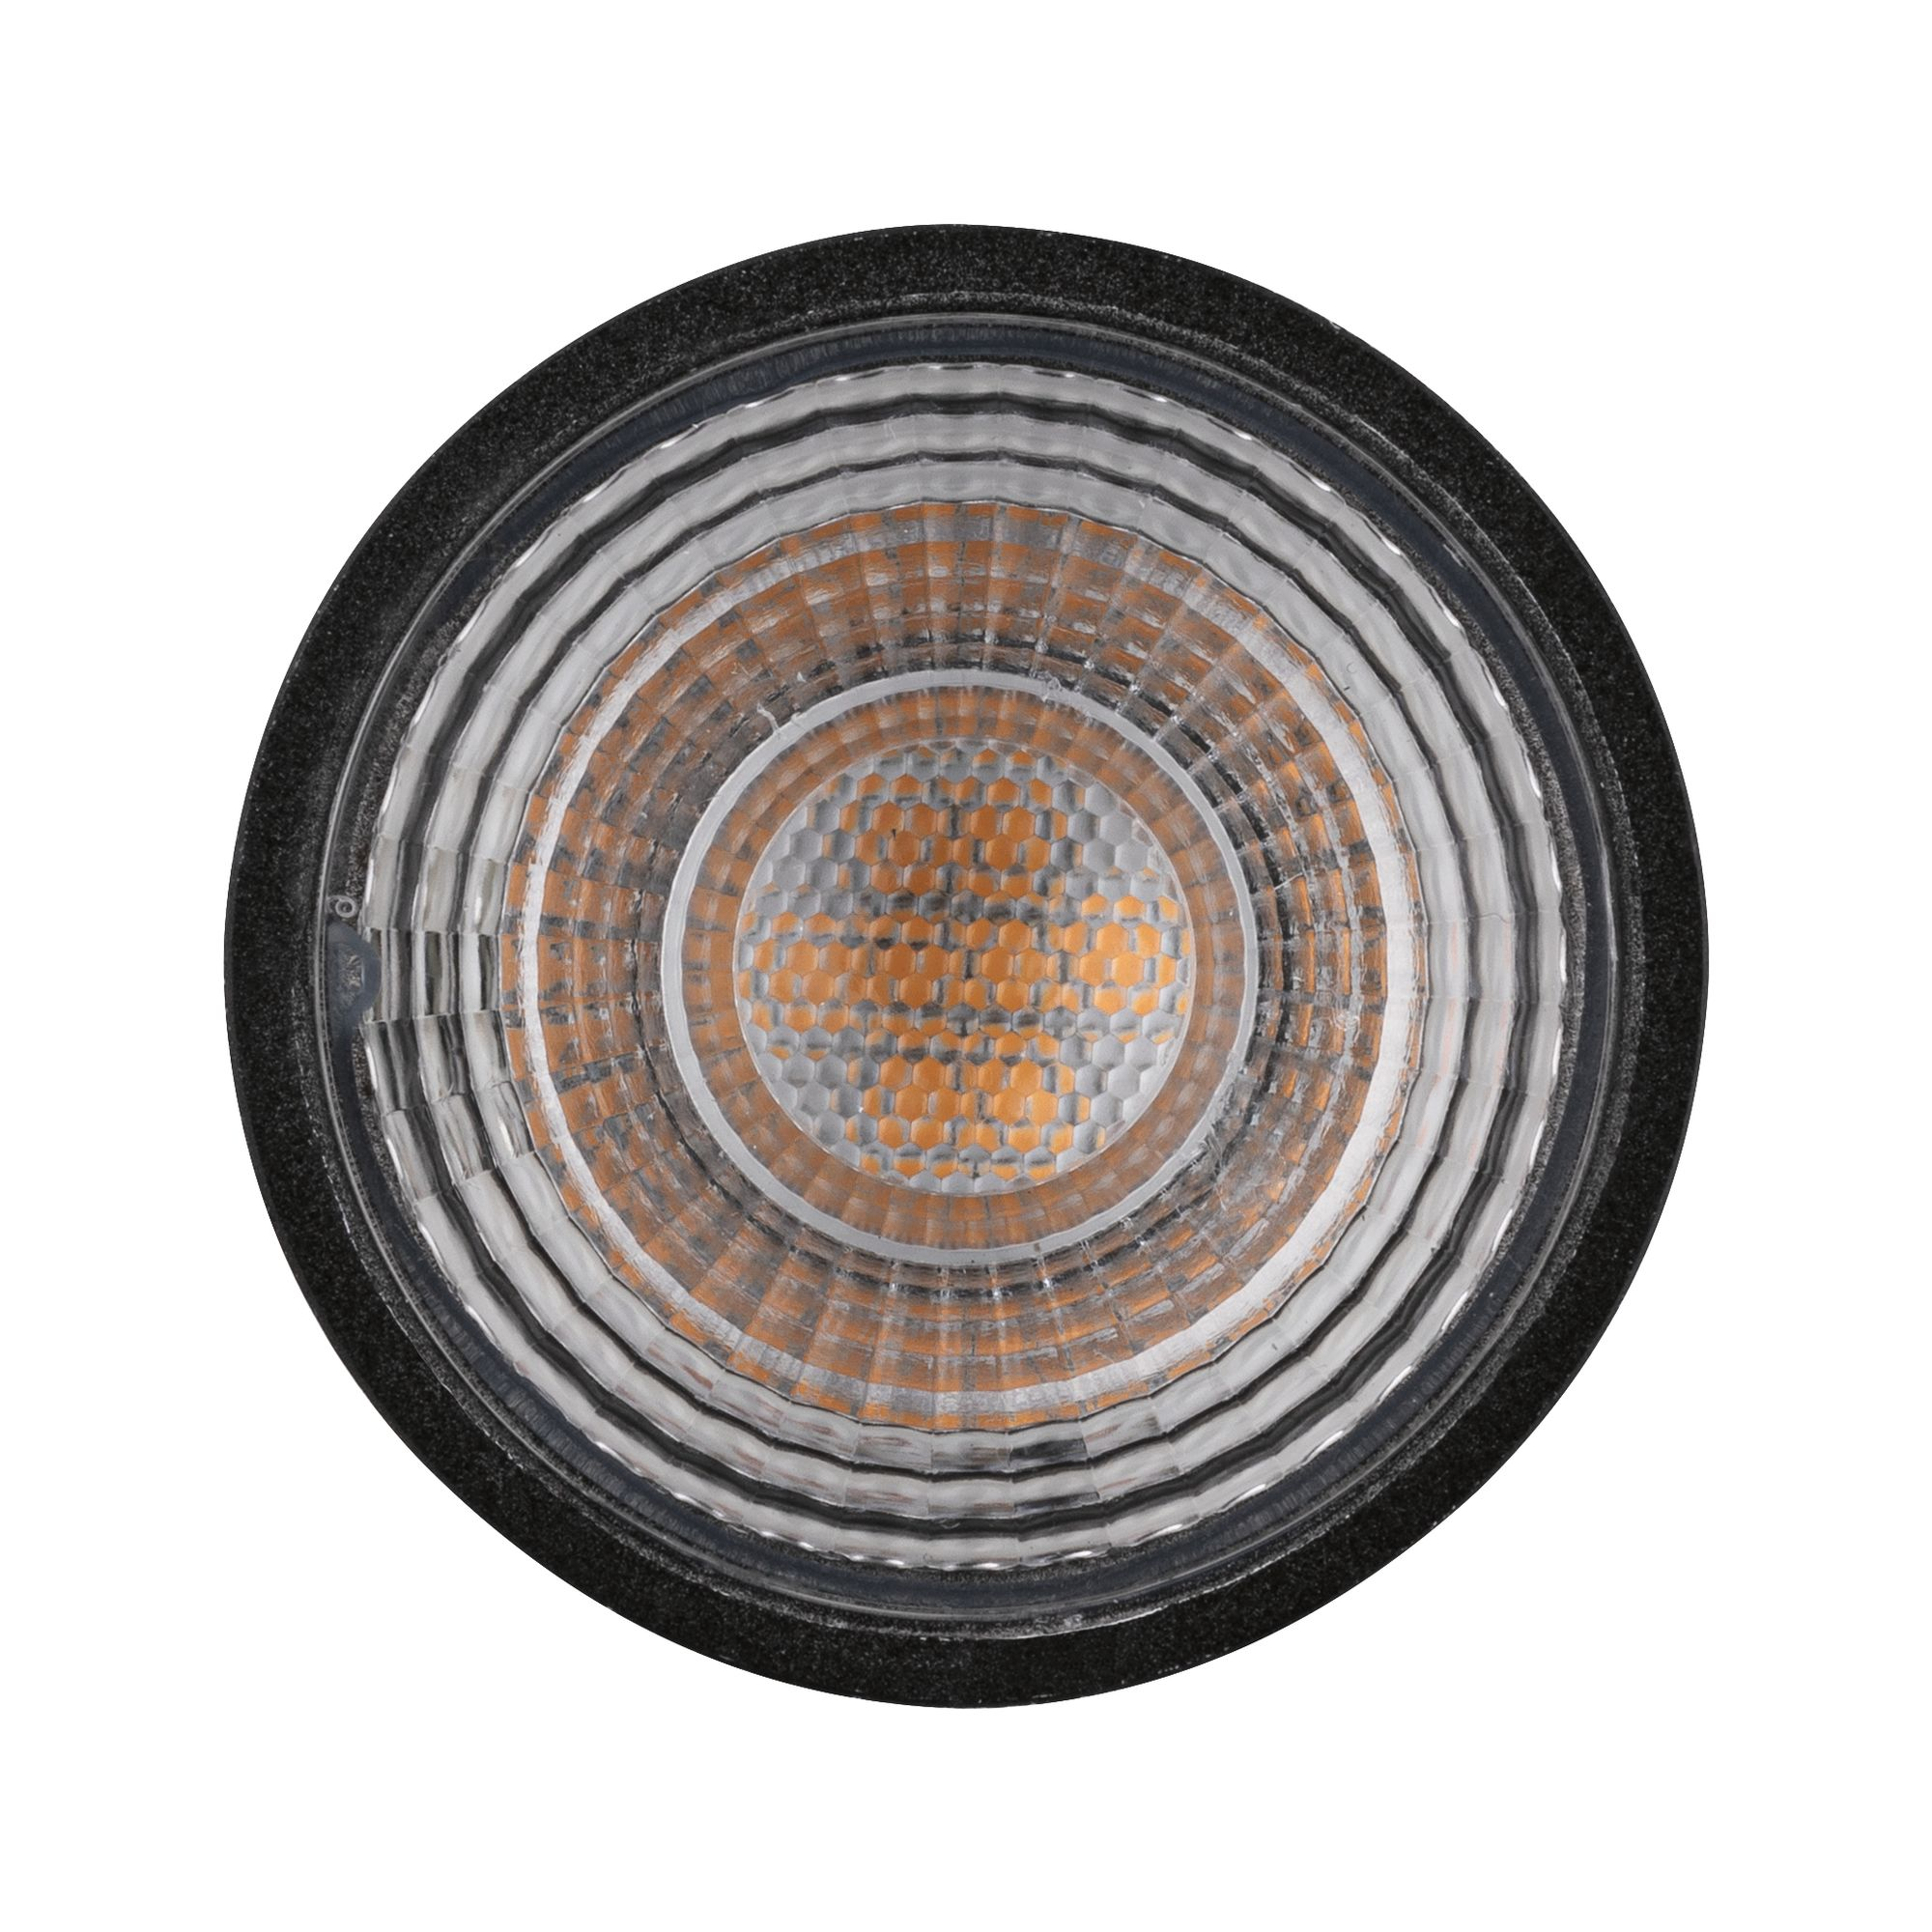 LED-Reflektorlampe GU5,3 6,5W 445 lm warmweiß + product picture